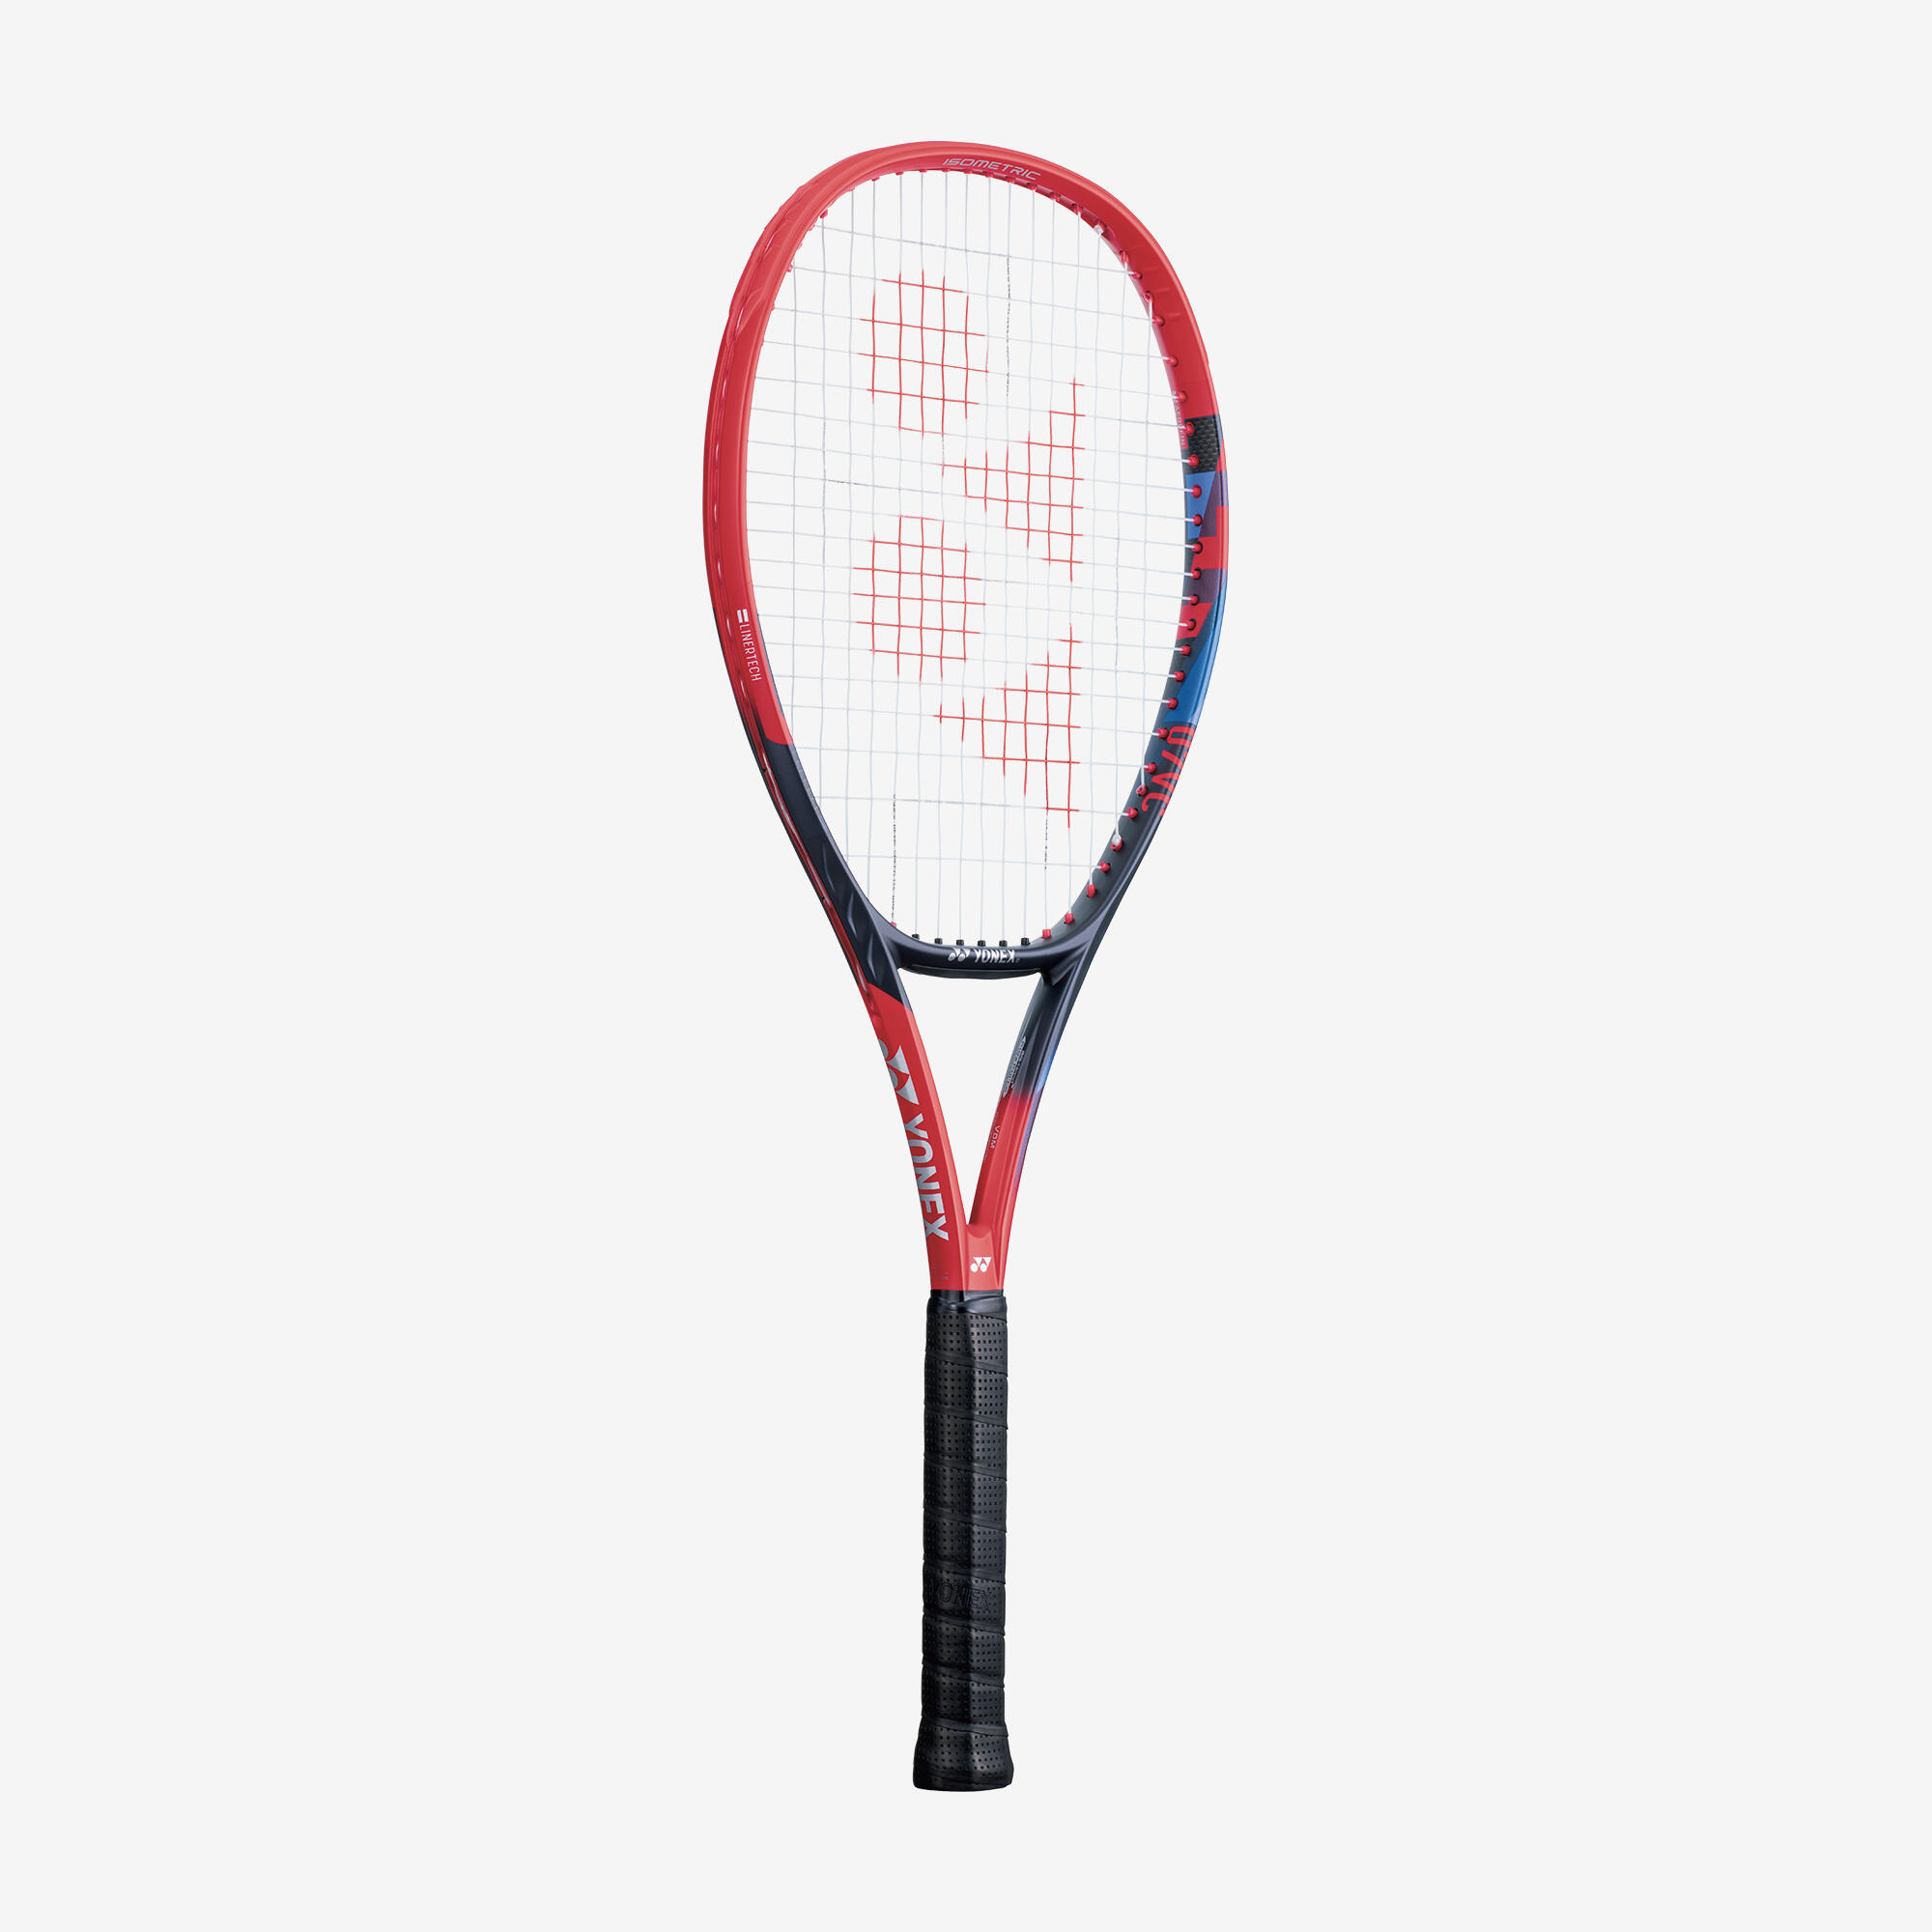 Rachetă Tenis YONEX EVCORE 100 300g Roșu Adulți 100  Rachete de tenis